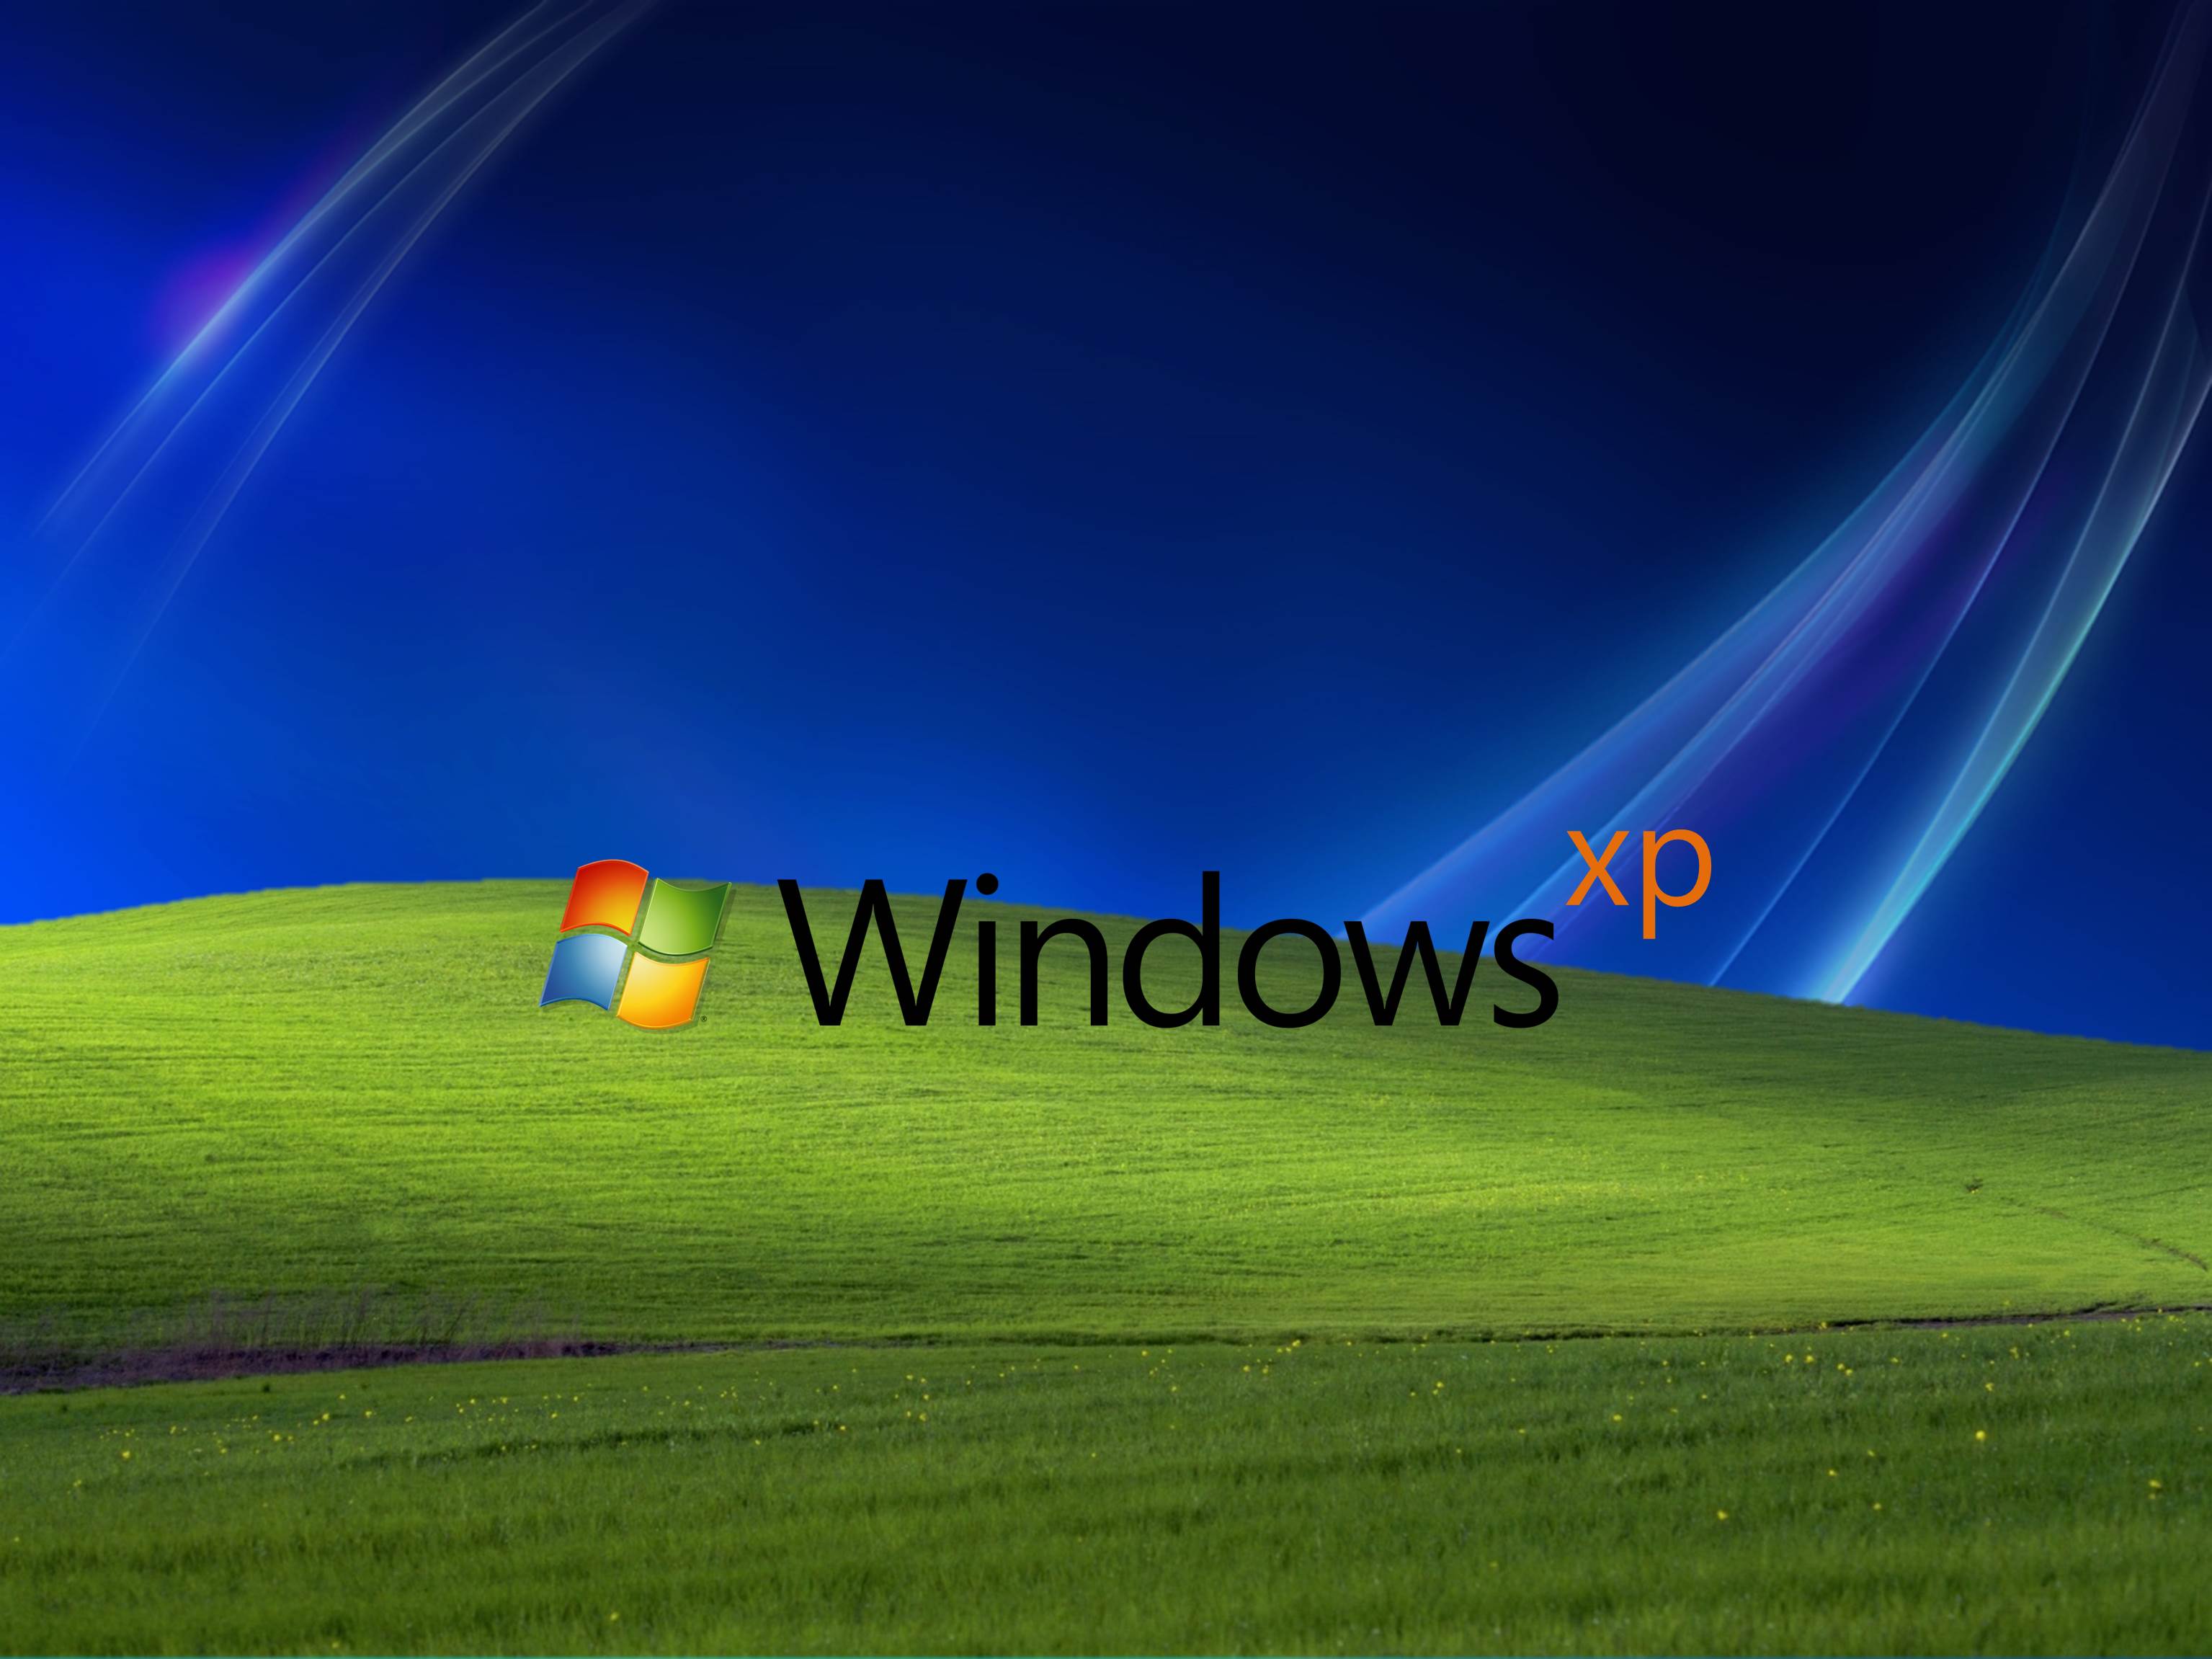 HD Windows XP Windows HS Wallpaper